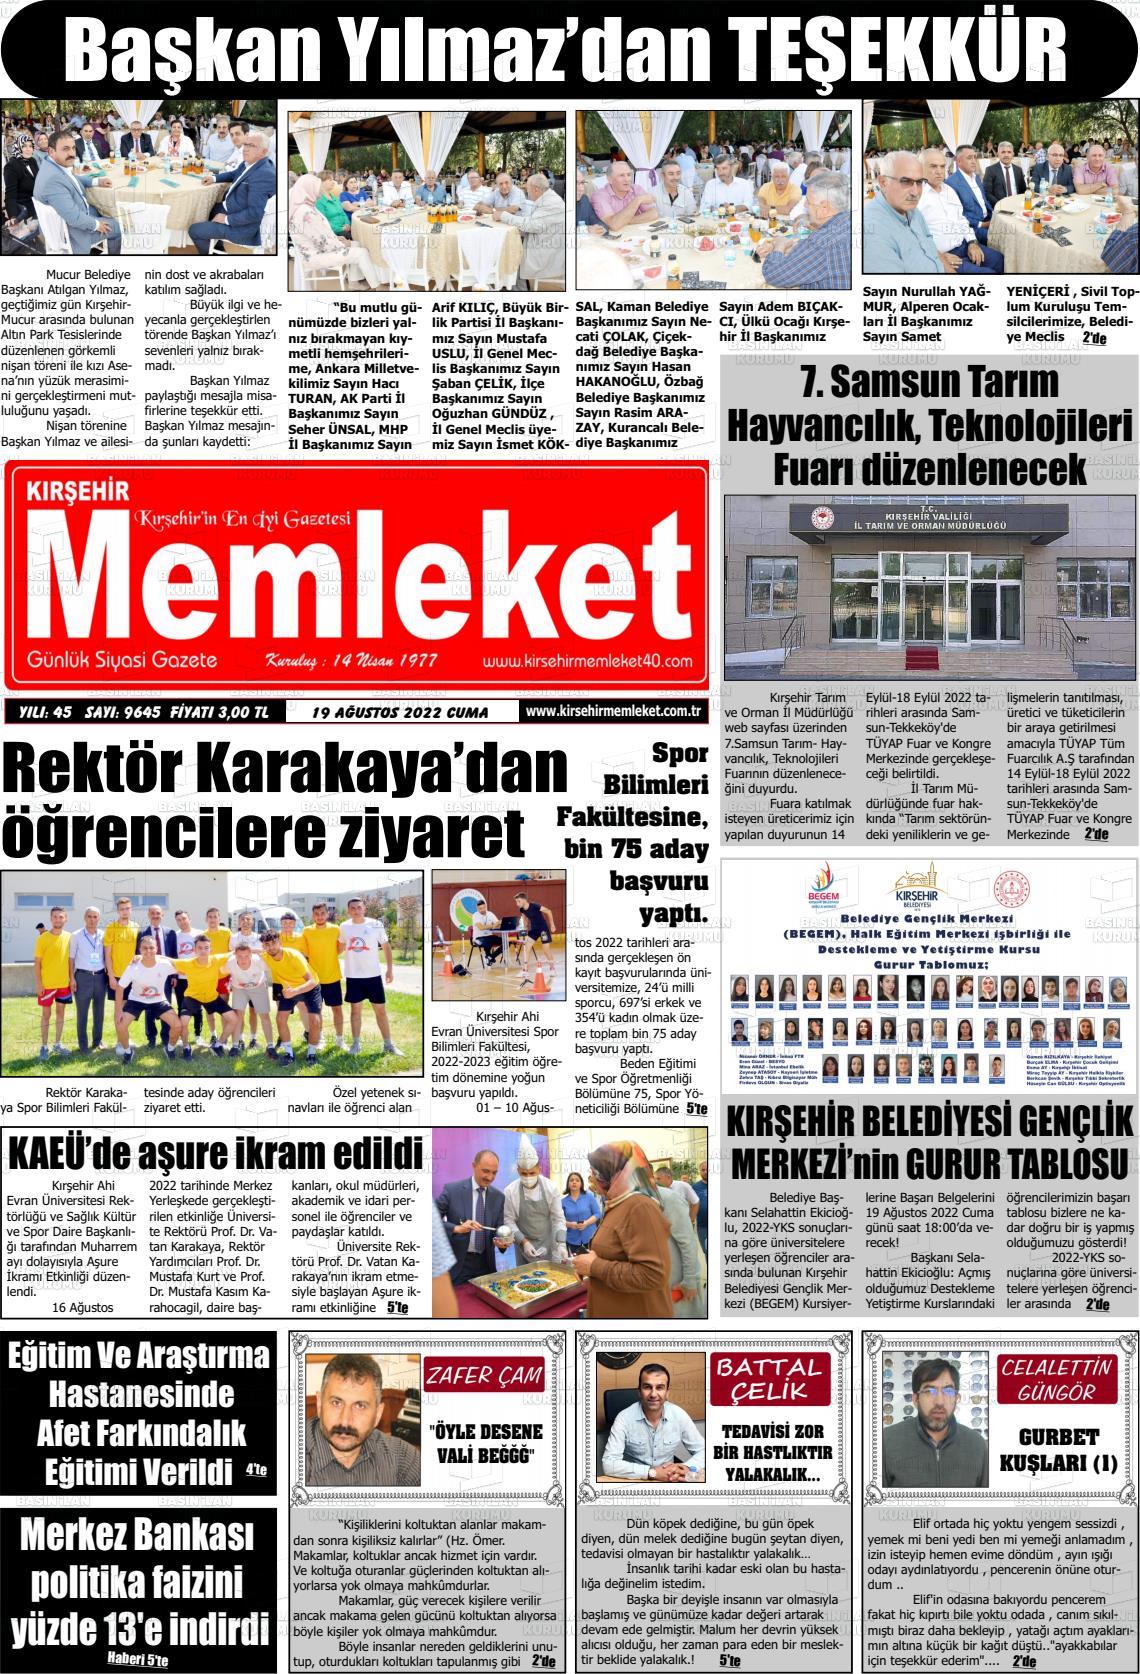 19 Ağustos 2022 Kırşehir Memleket Gazete Manşeti